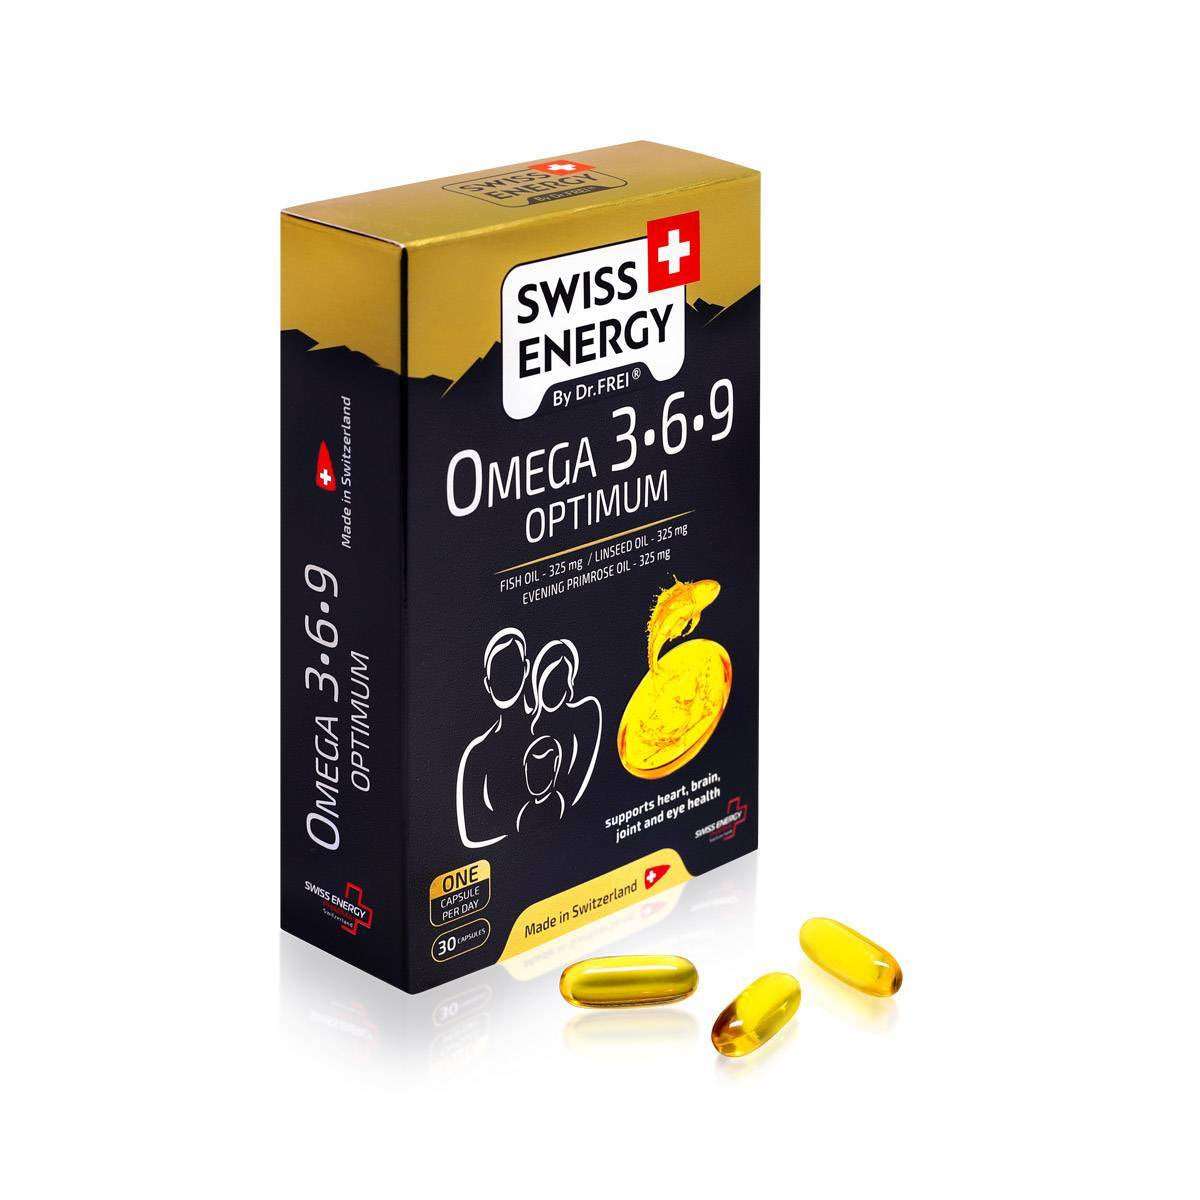 Swiss Energy, Omega-3-6-9 OPTIMUM, balanced omega fatty acid complex, –  Swiss Herbs